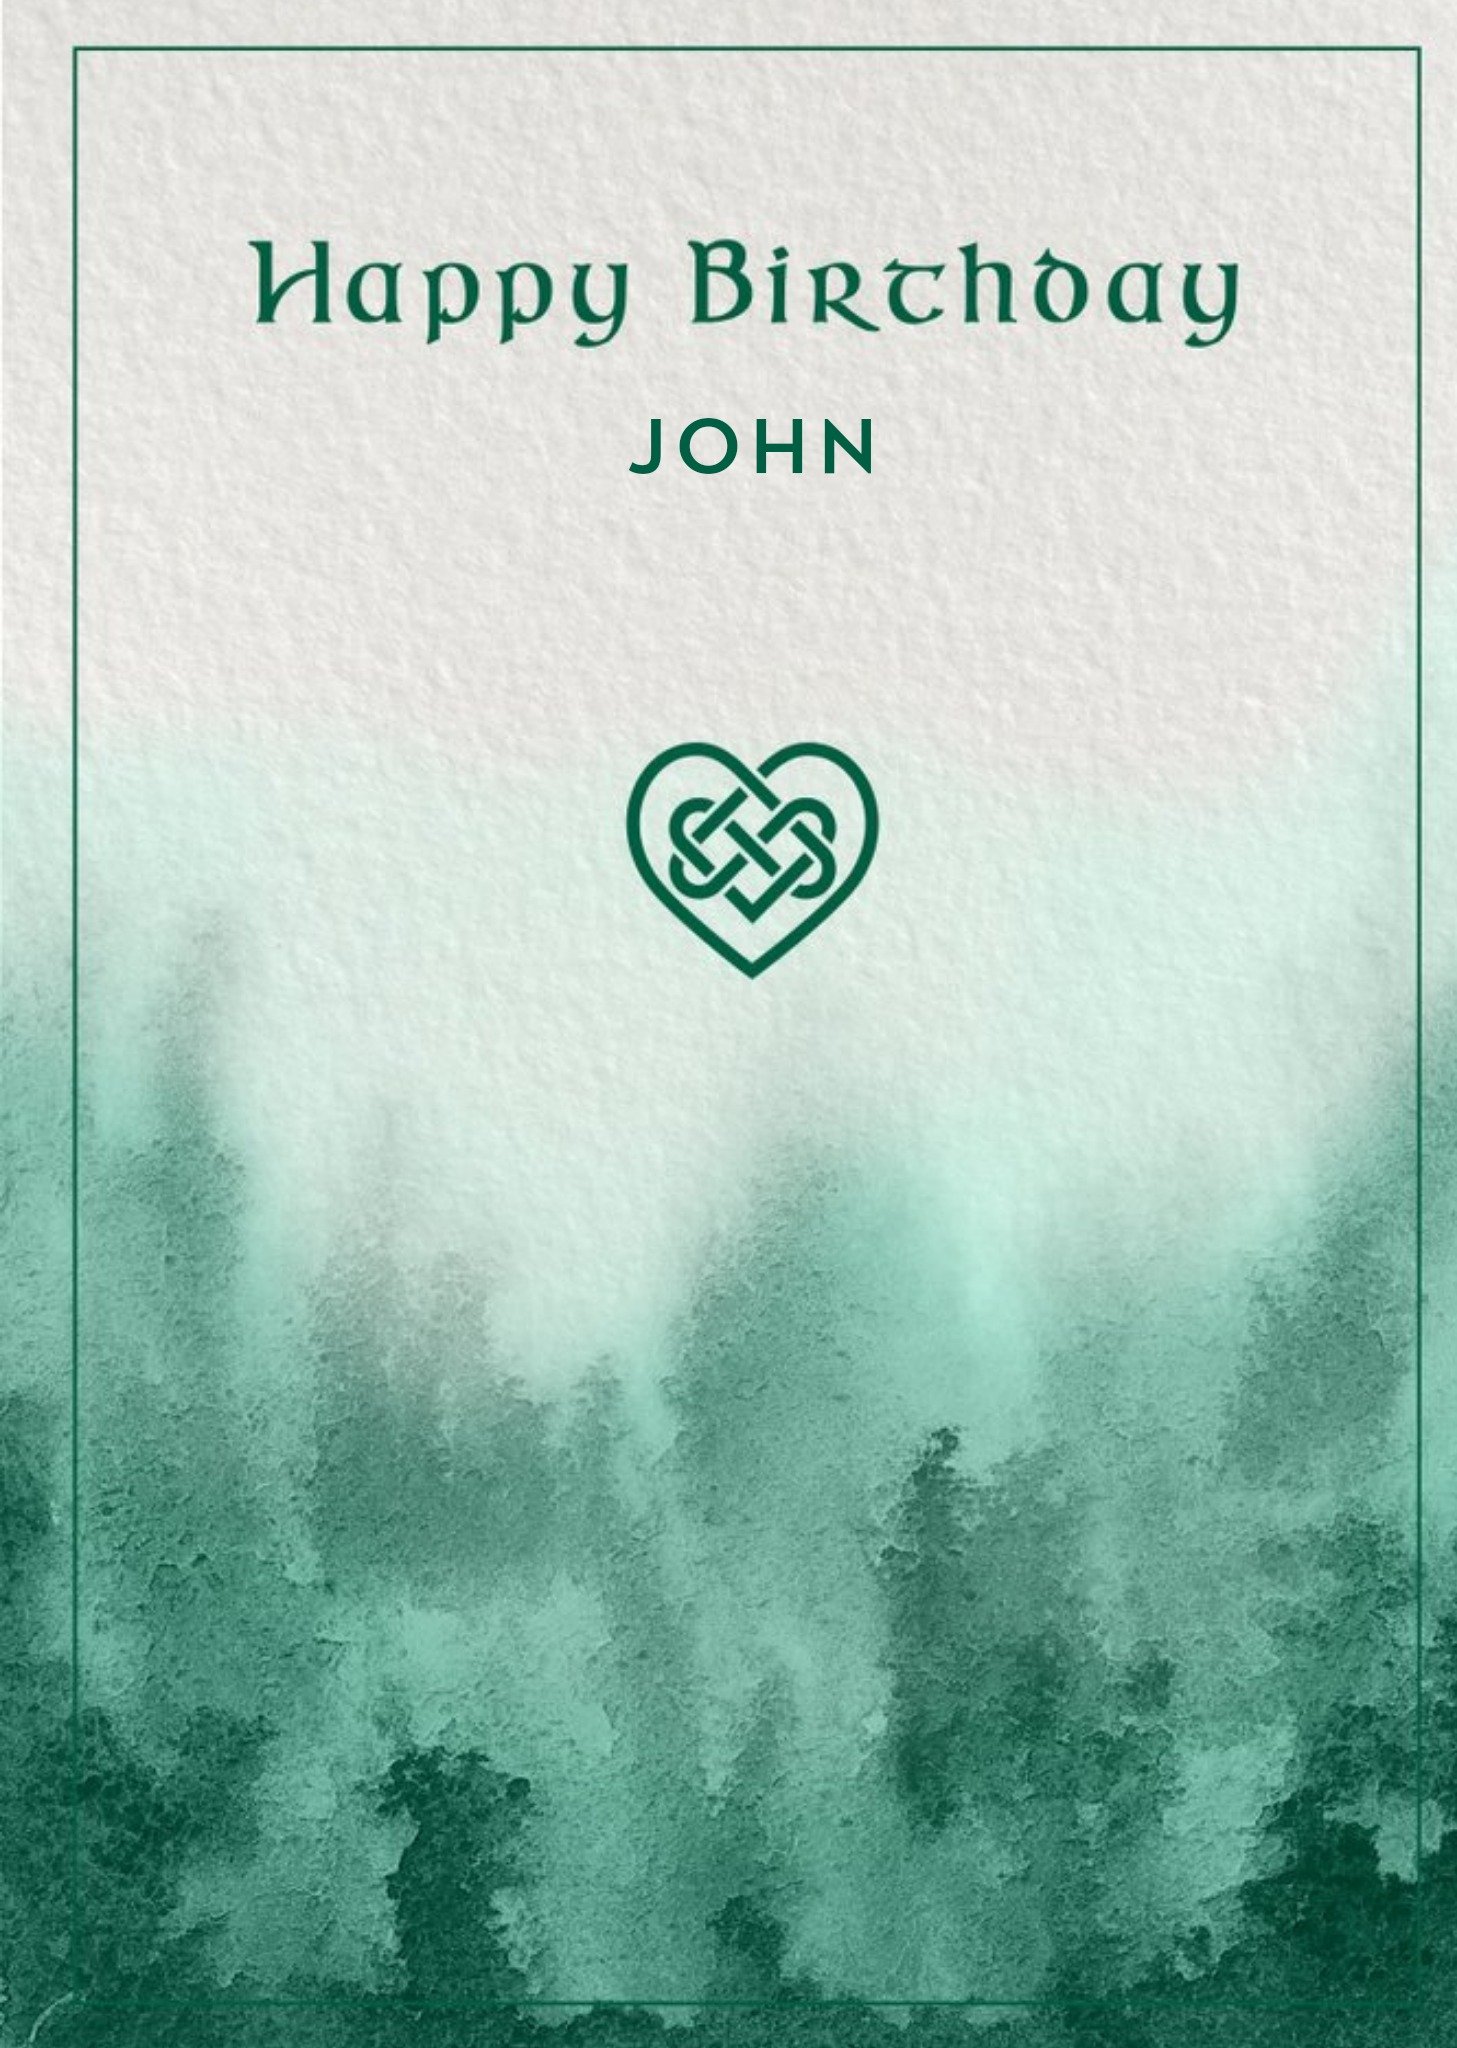 Moonpig Pigment Green Watercolour Celtic Happy Birthday Birthday Card, Large